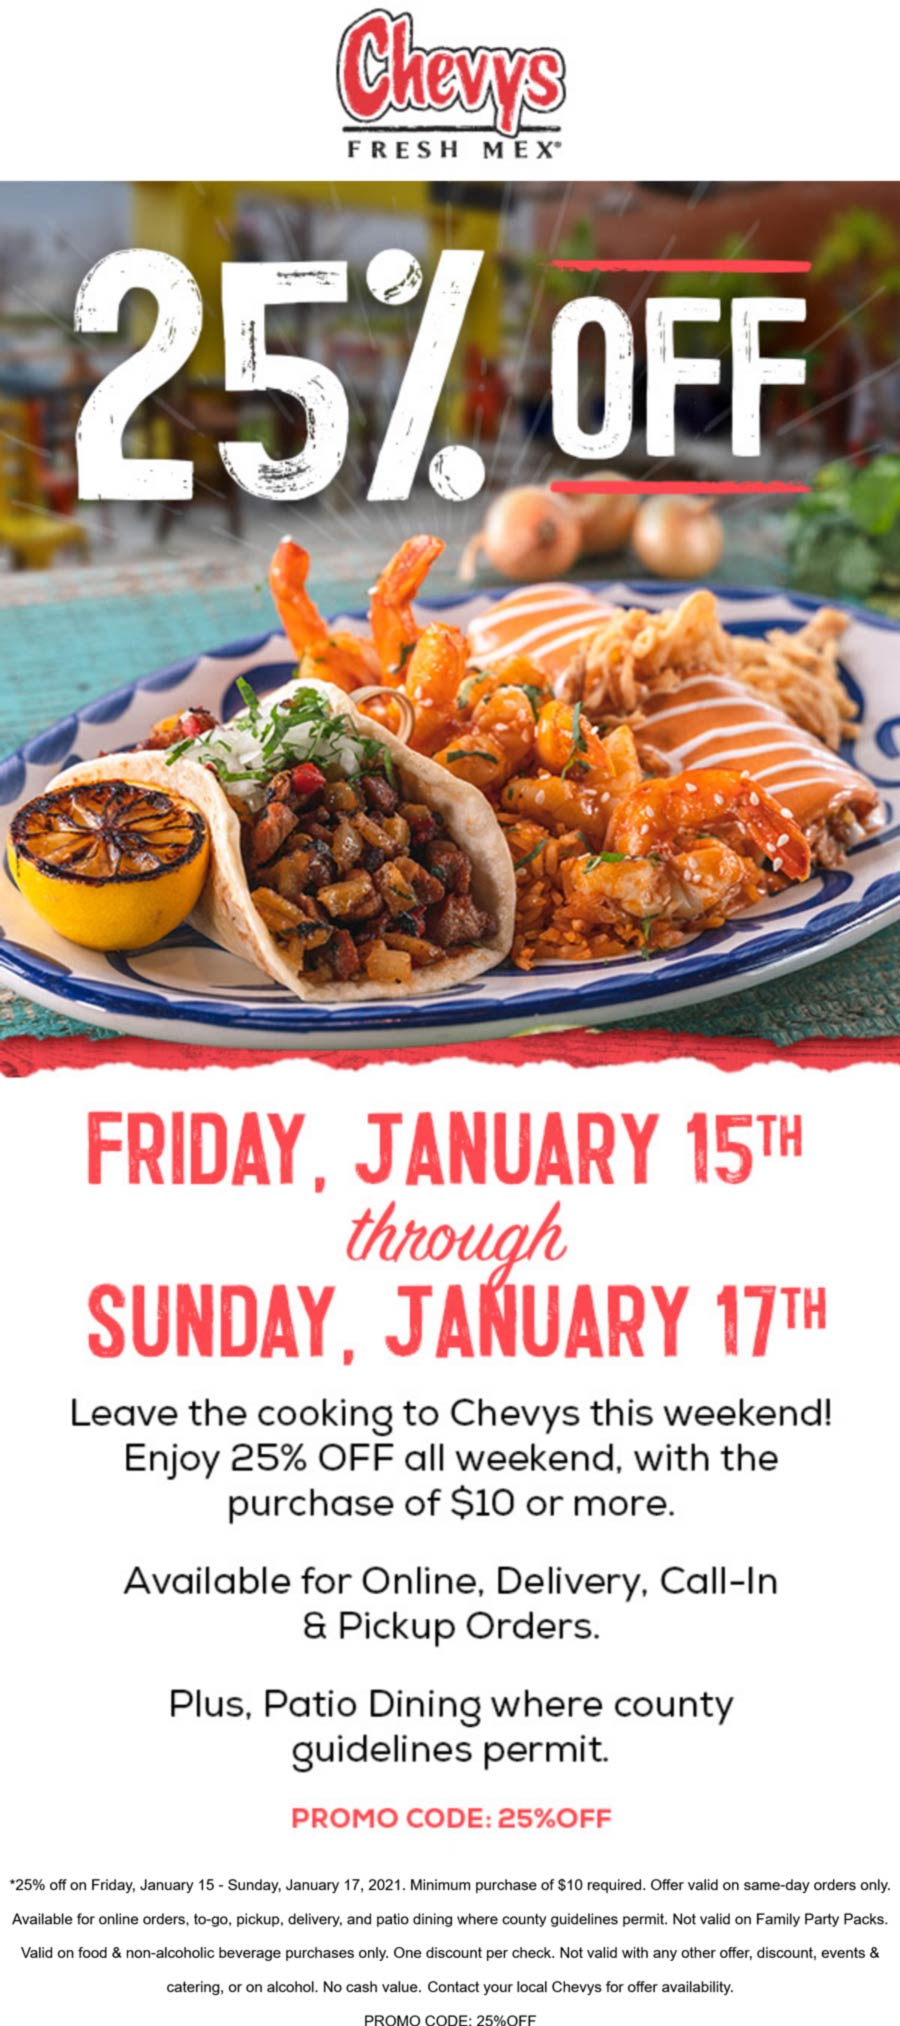 Chevys restaurants Coupon  25% off at Chevys Fresh Mex restaurants via promo code 25%OFF #chevys 